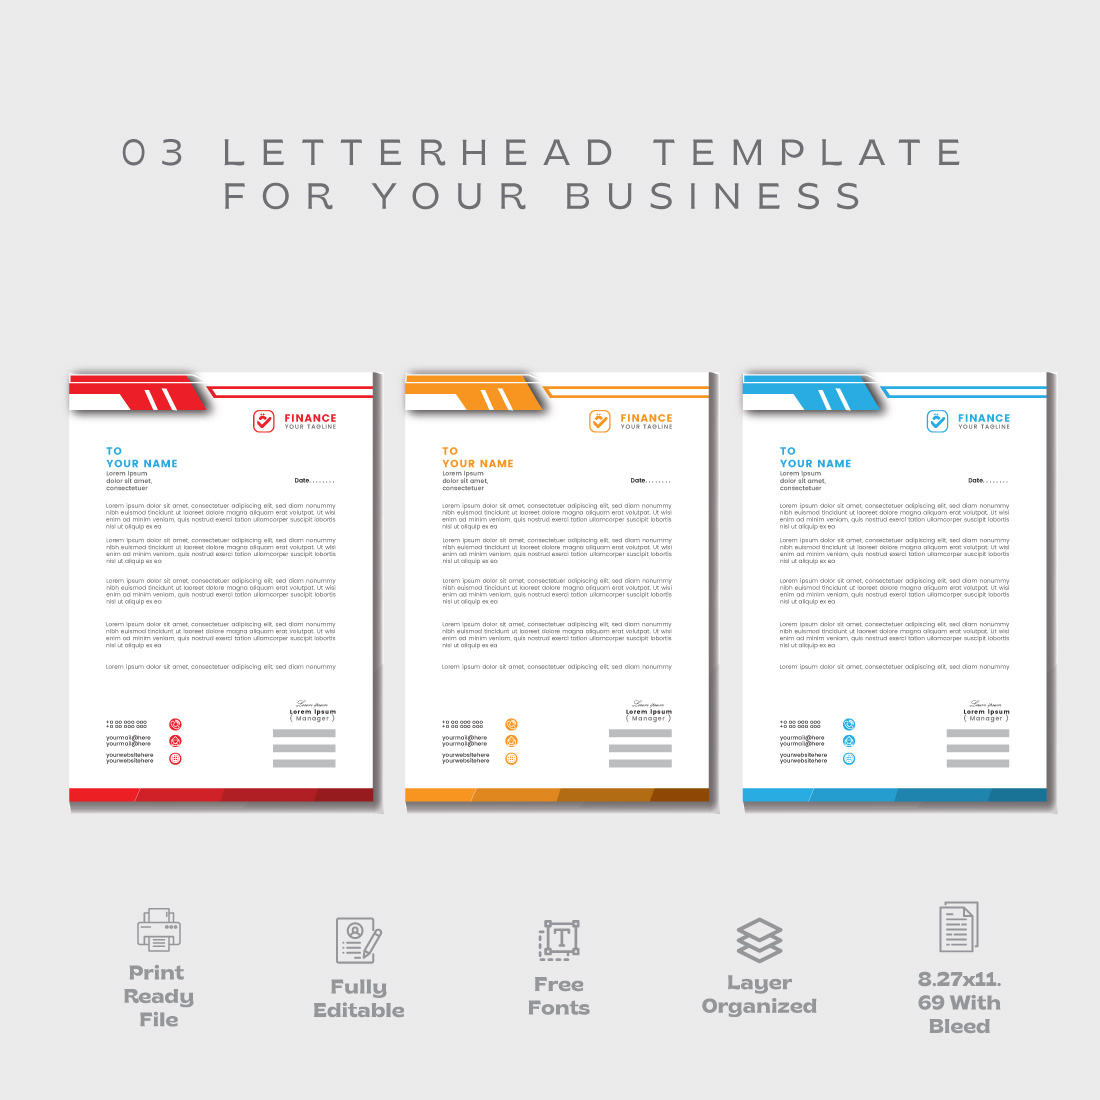 03 Modern letterhead template | Letterhead template design for your businessProfessional Letterhead Template for your Business Very Easy To customize for every fileA4 Letterhead cover image.